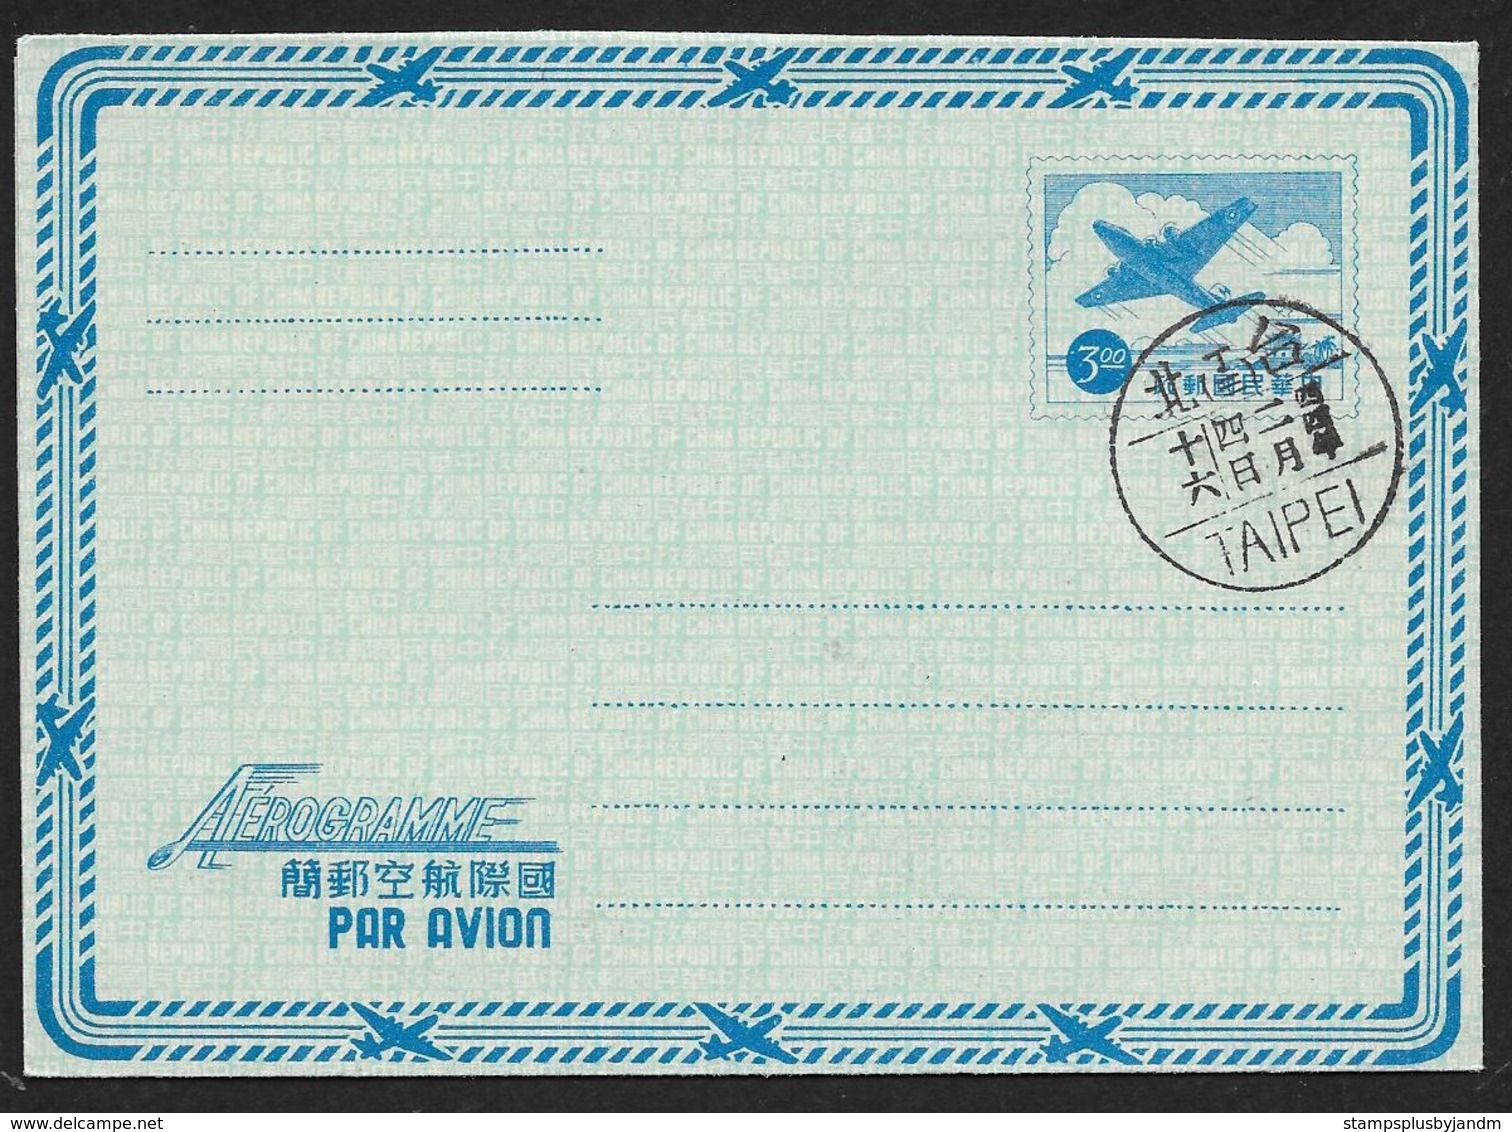 REPUBLIC OF CHINA (TAIWAN) Aerogramme $3 Airplane C1950-1960s Taipei Cancel! STK#X21229 - Postal Stationery